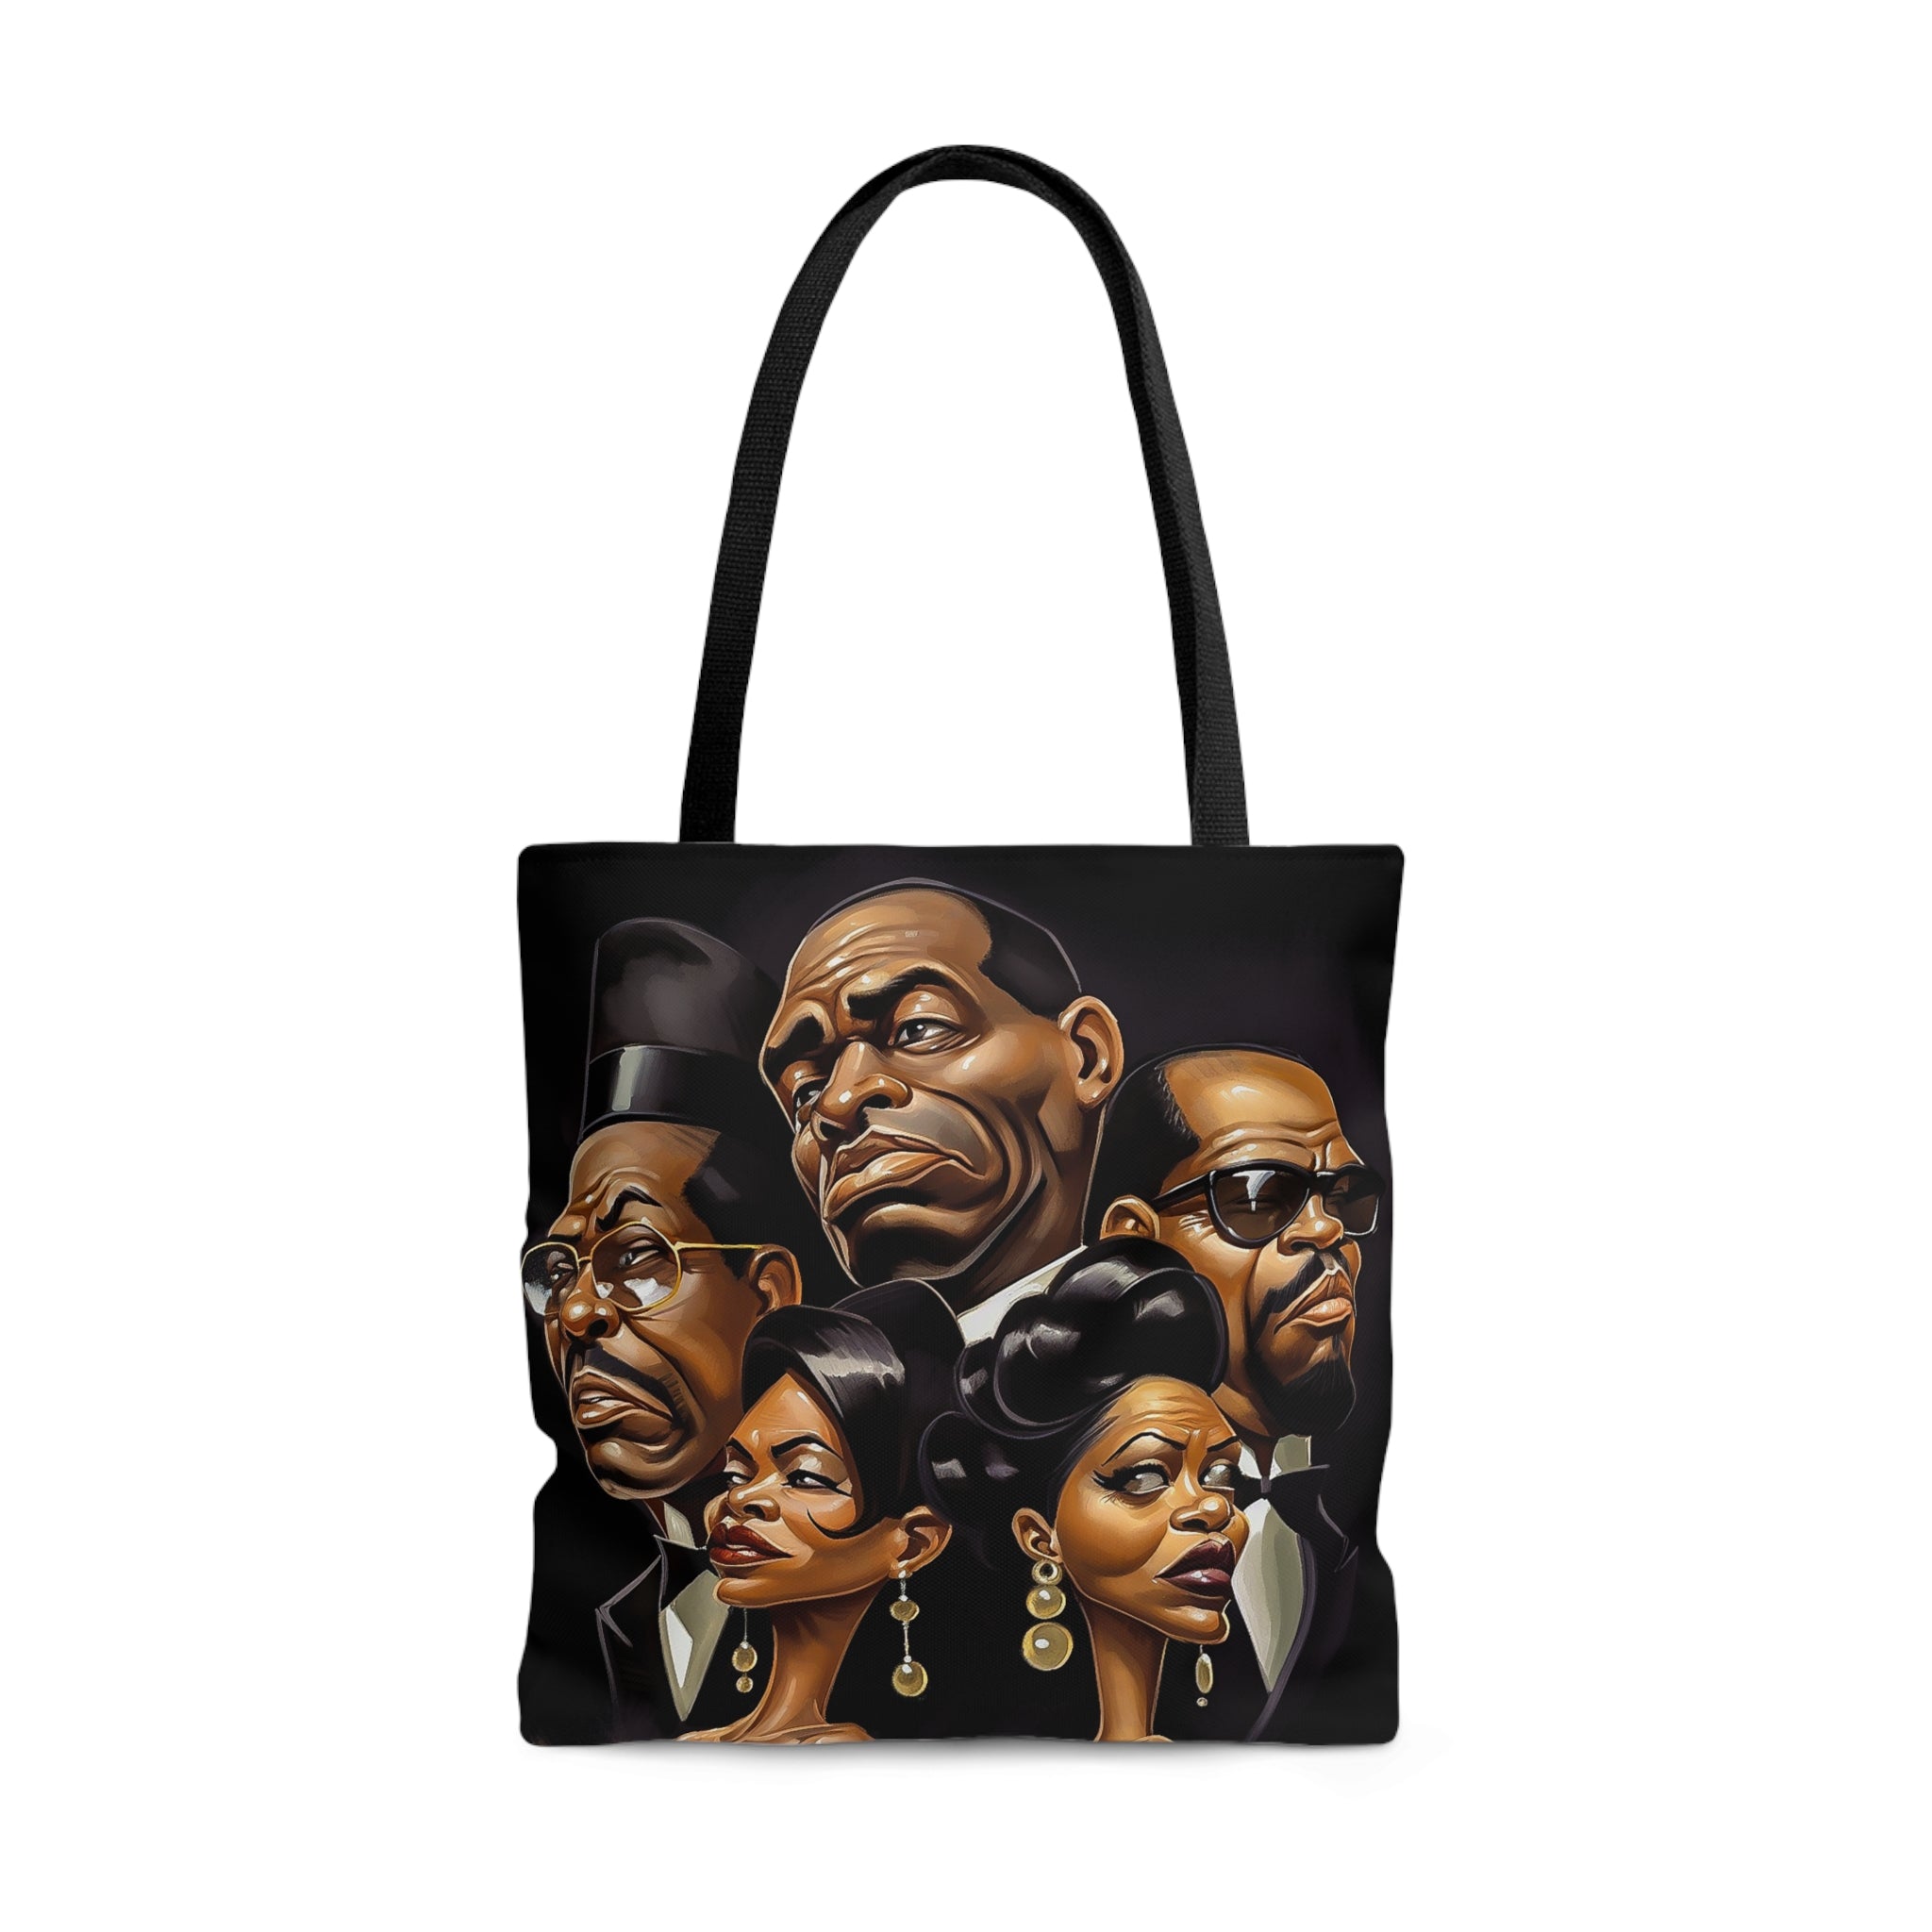 "JUS BOUGIE II" - African American Themed Tote Bag